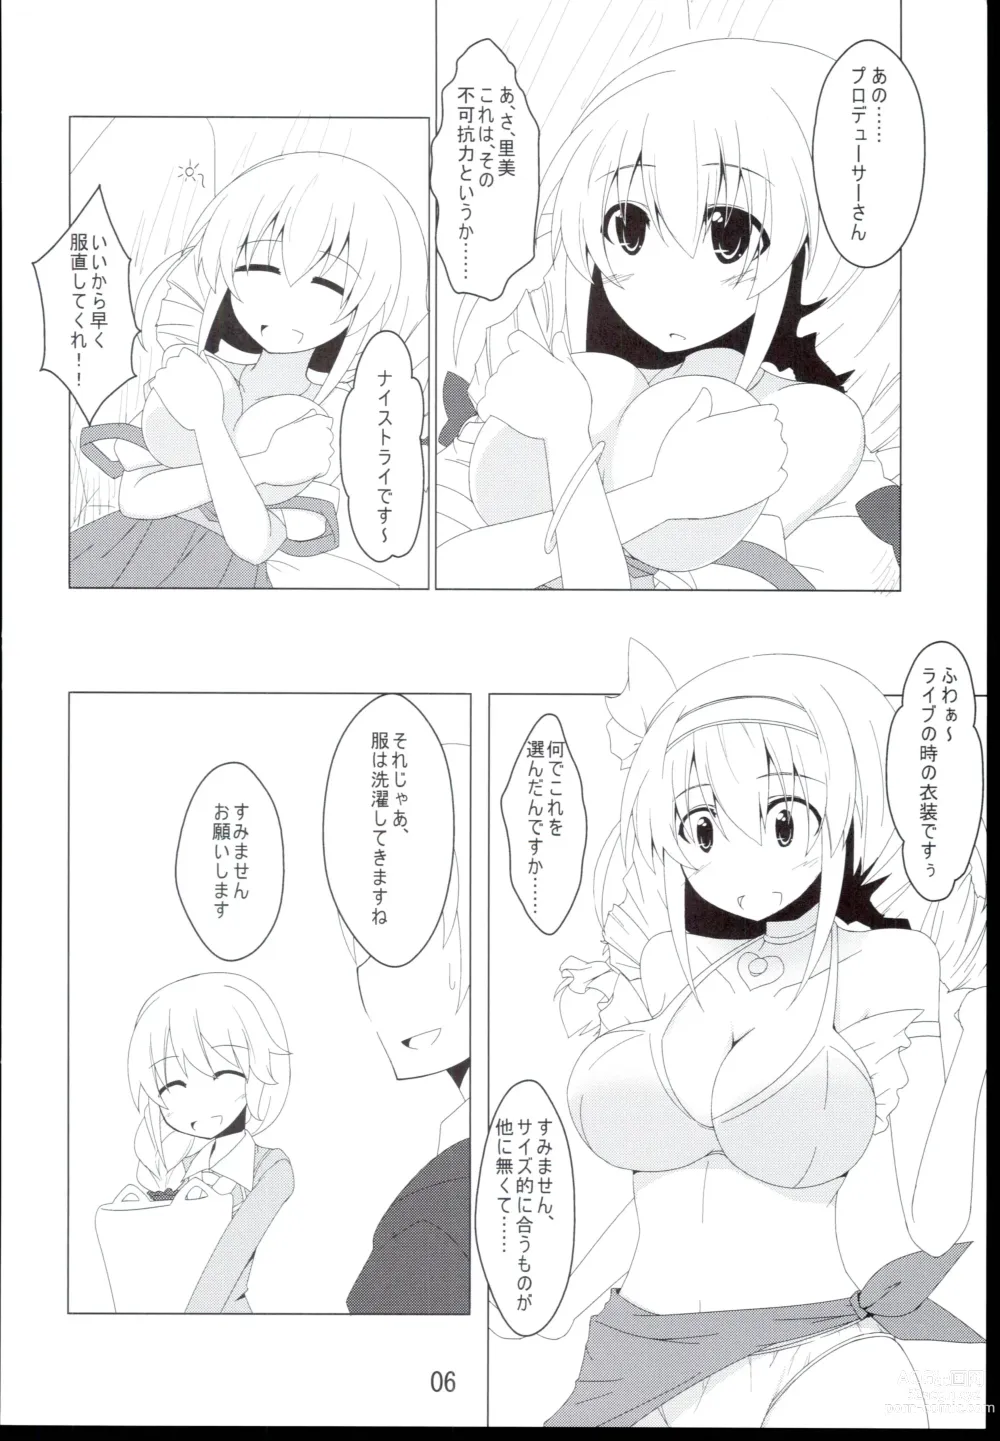 Page 6 of doujinshi Dokidoki Clumsy Girl!